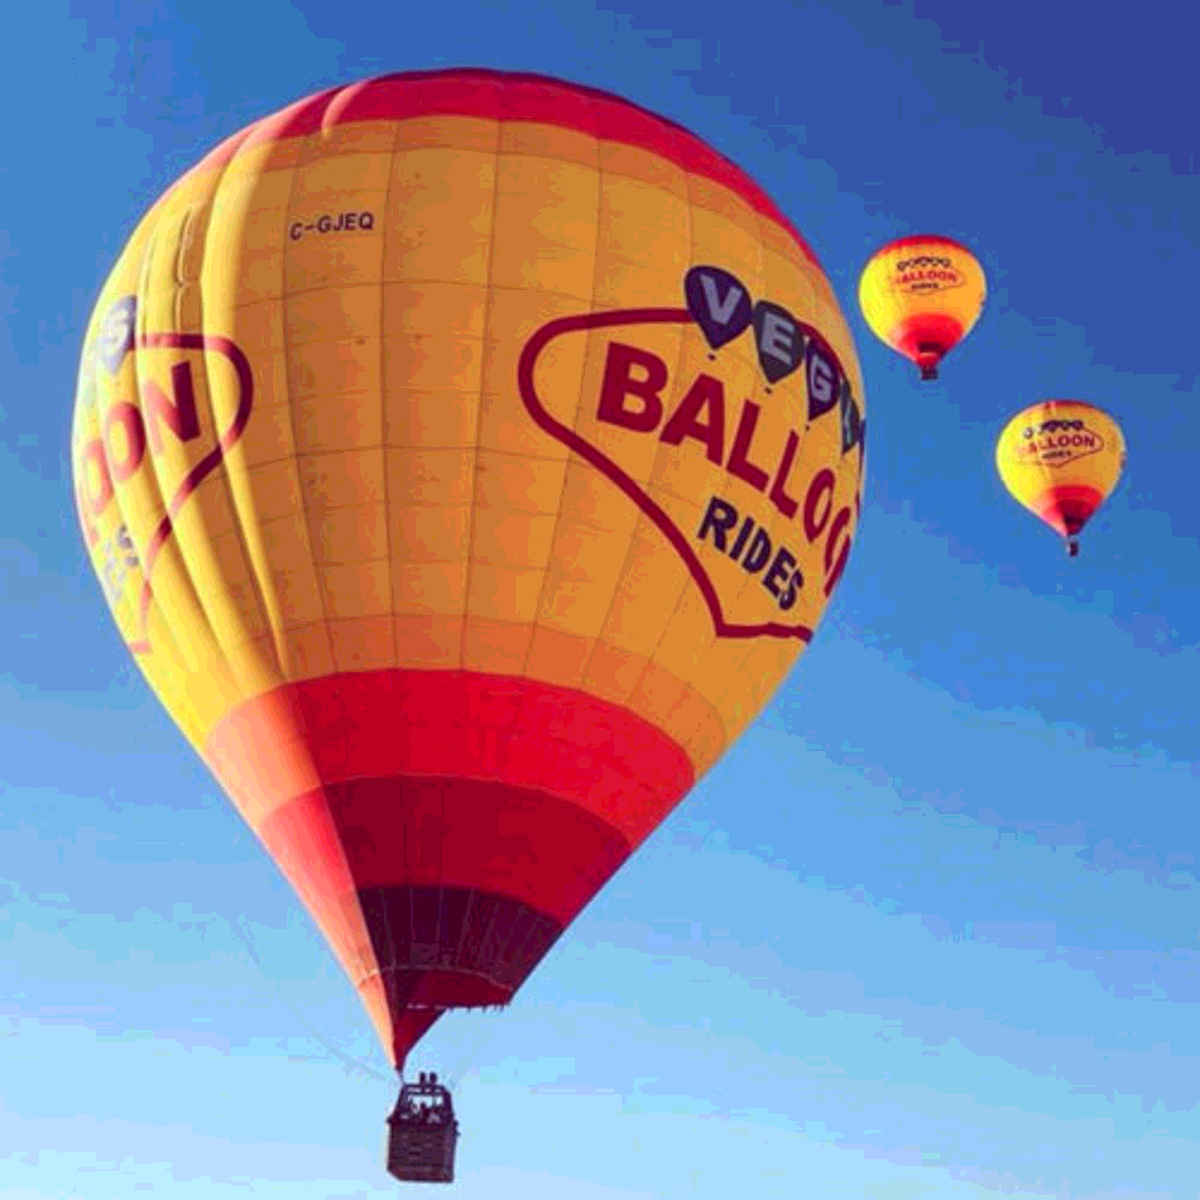 Hot air balloons over the Las Vegas area